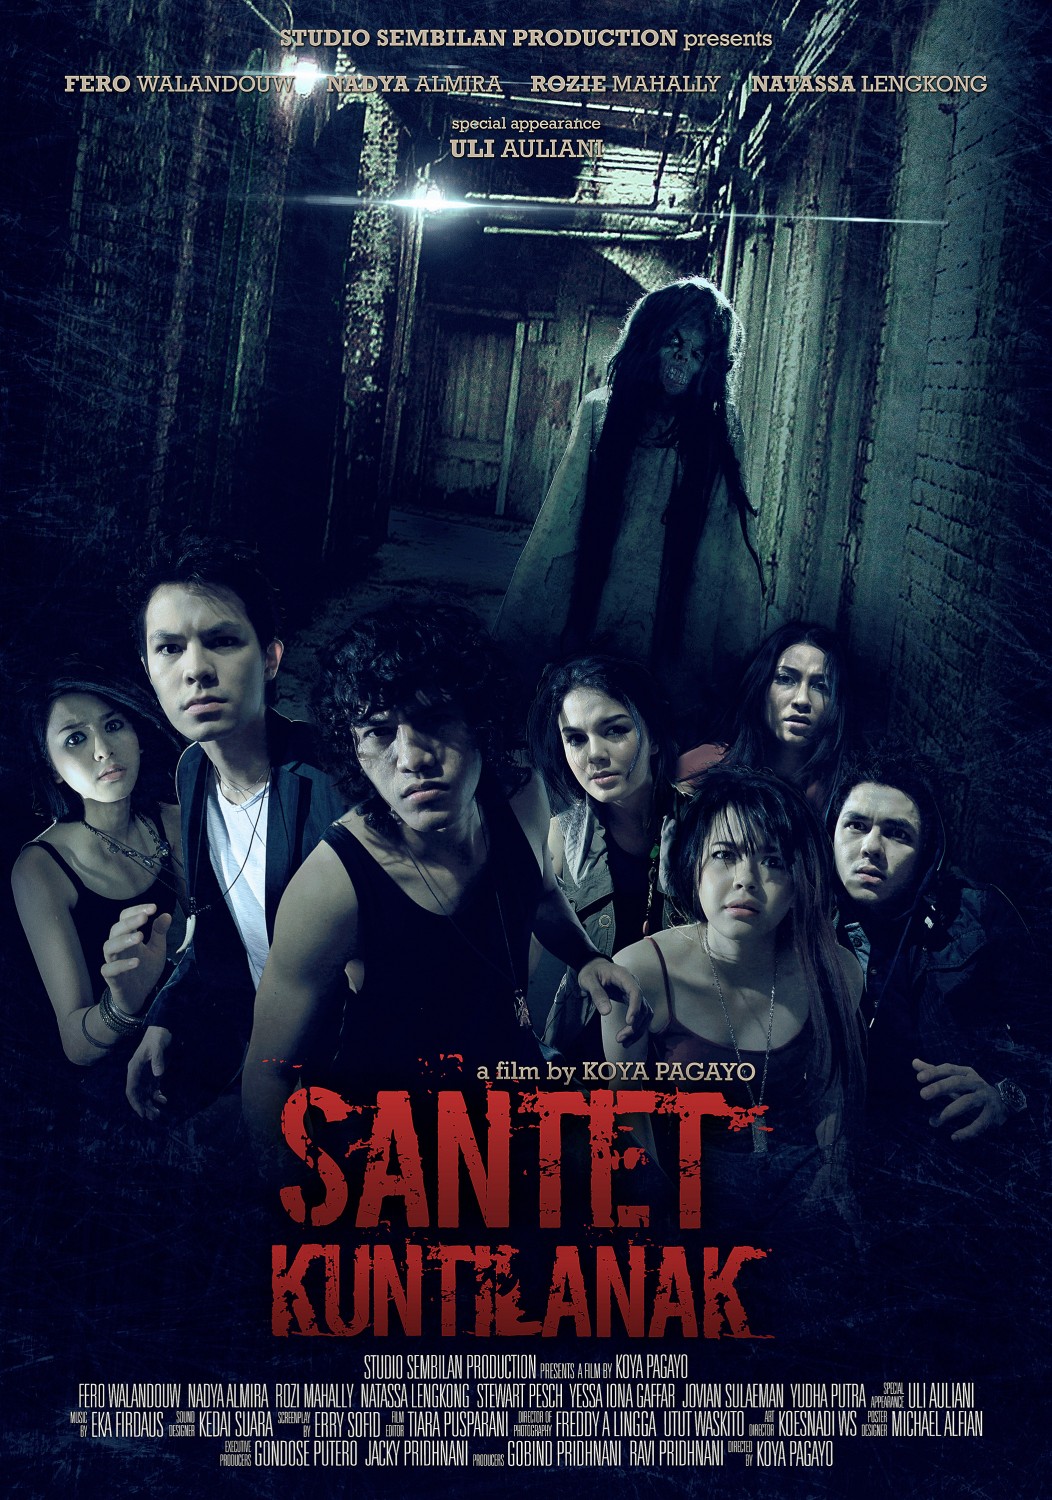 Extra Large Movie Poster Image for Santet kuntilanak 